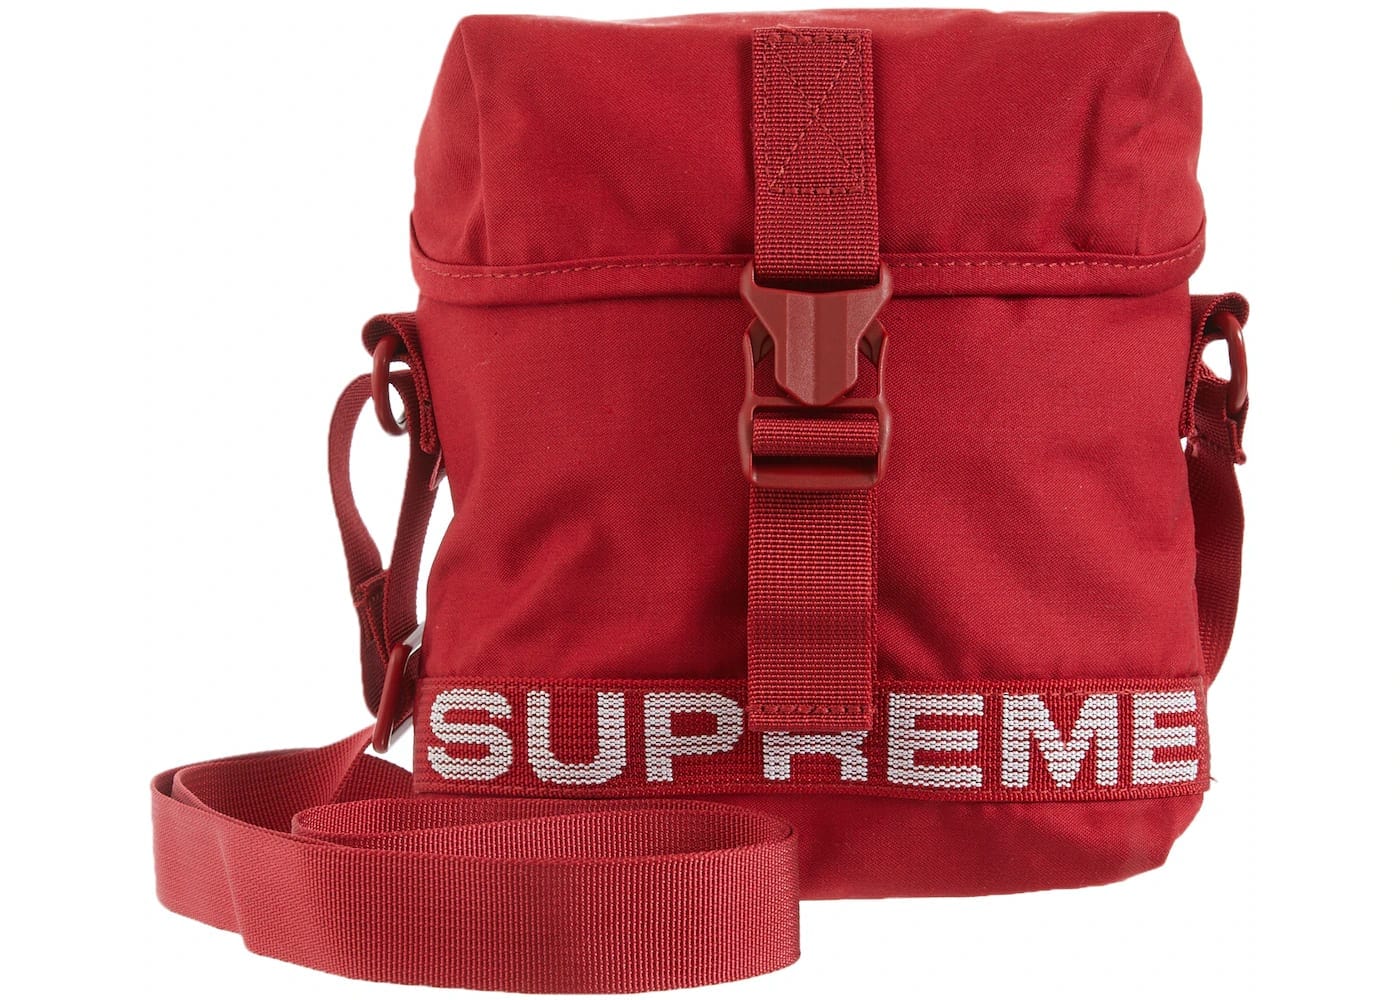 Bags - Shop - Supreme